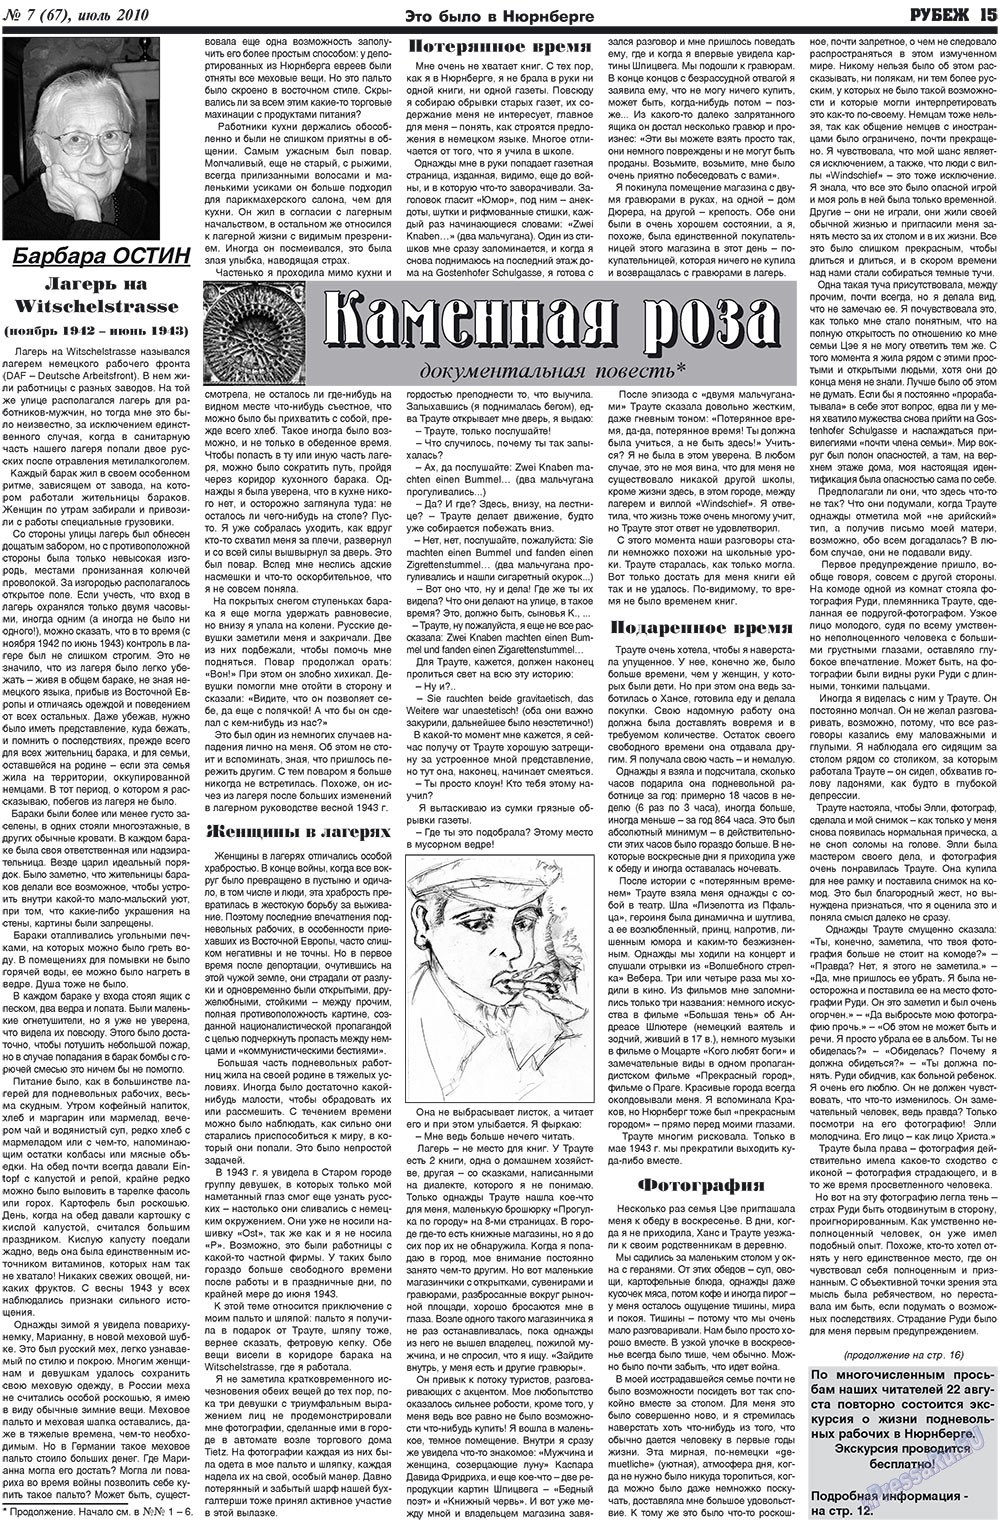 Рубеж, газета. 2010 №7 стр.15